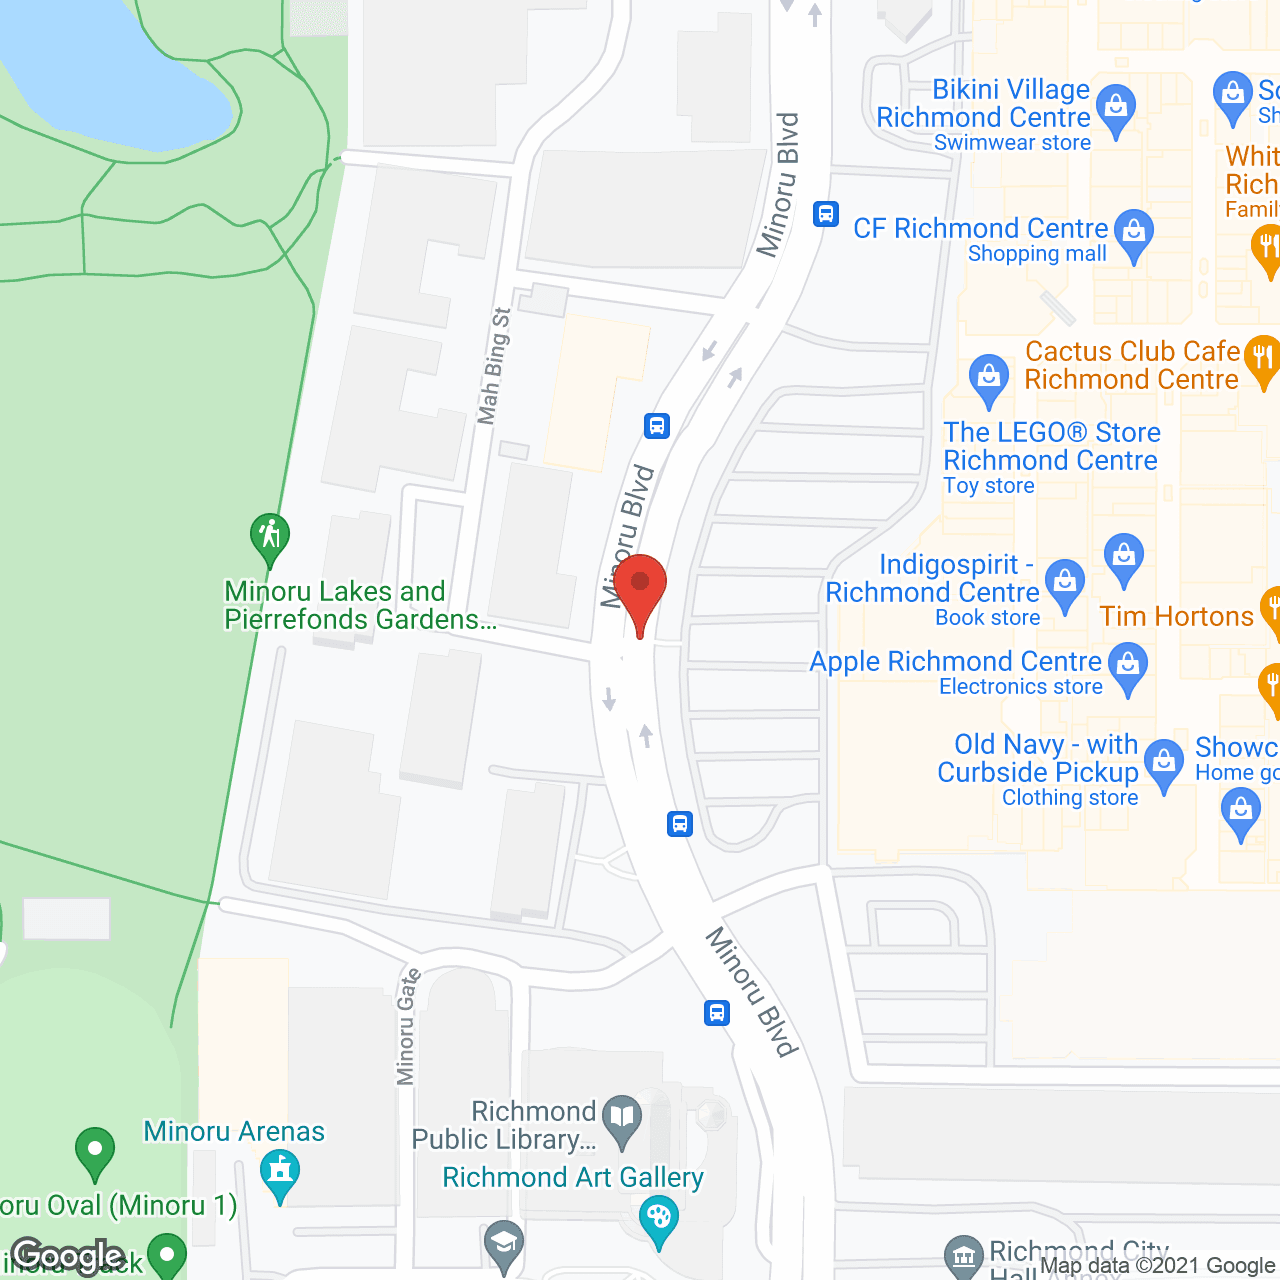 Kiwanis Court I-III in google map